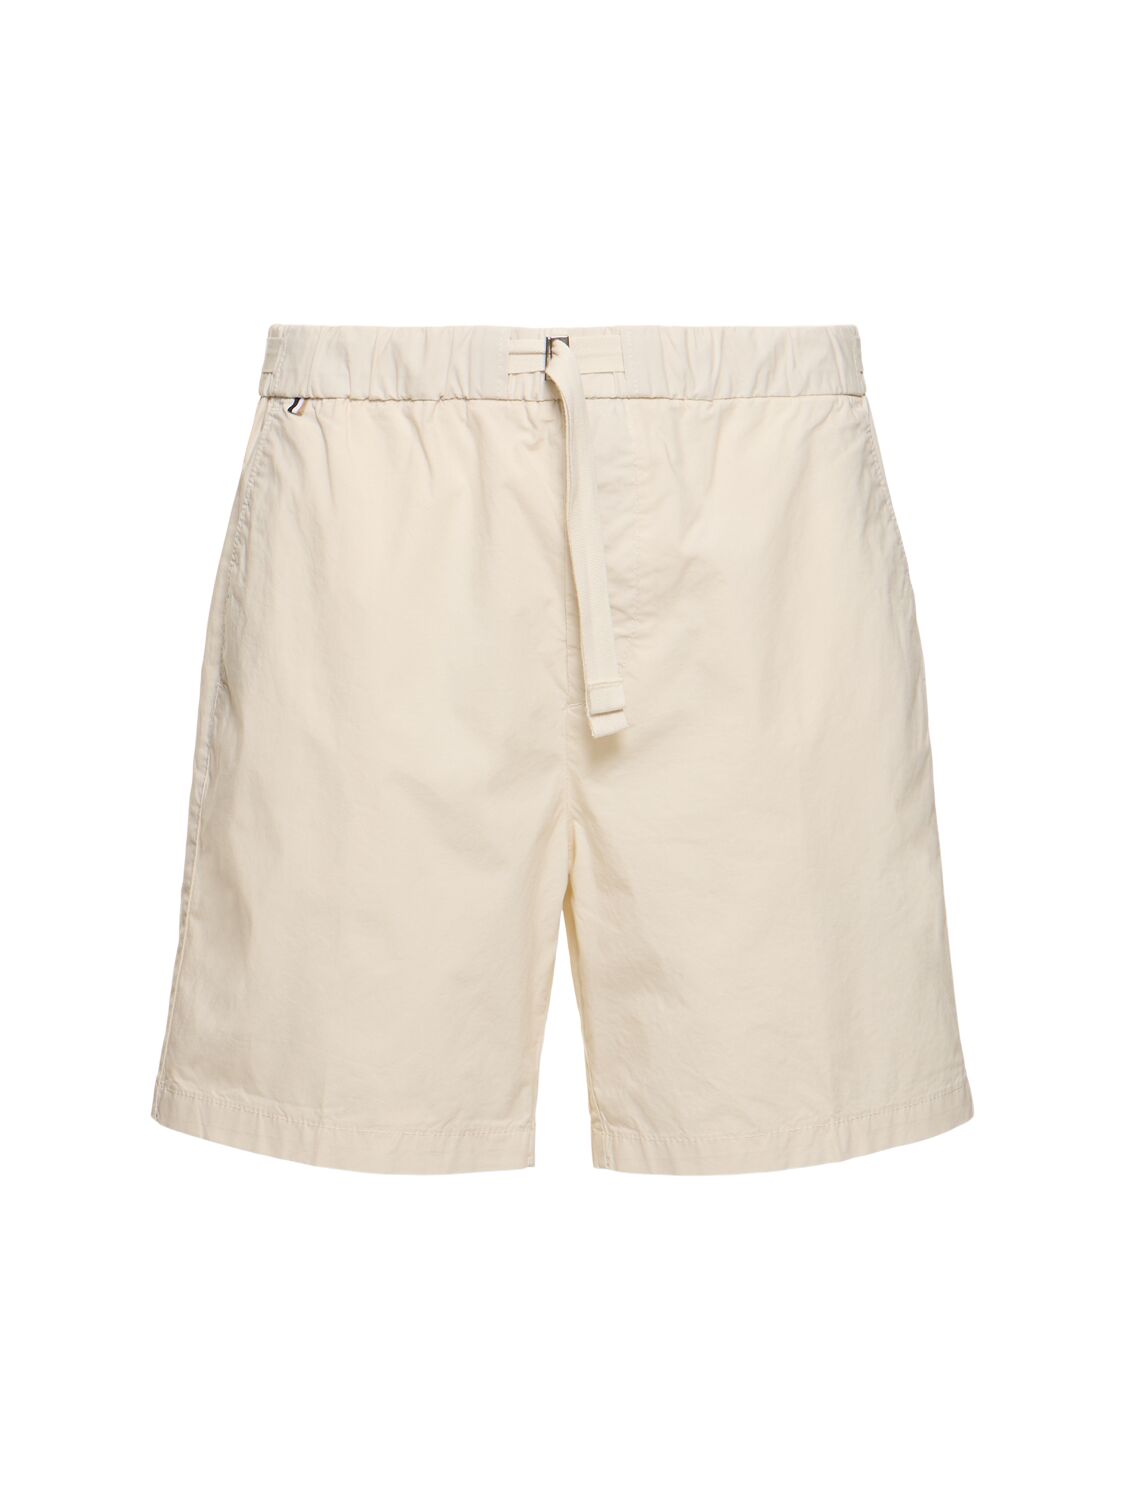 Image of Kenosh Cotton Blend Shorts